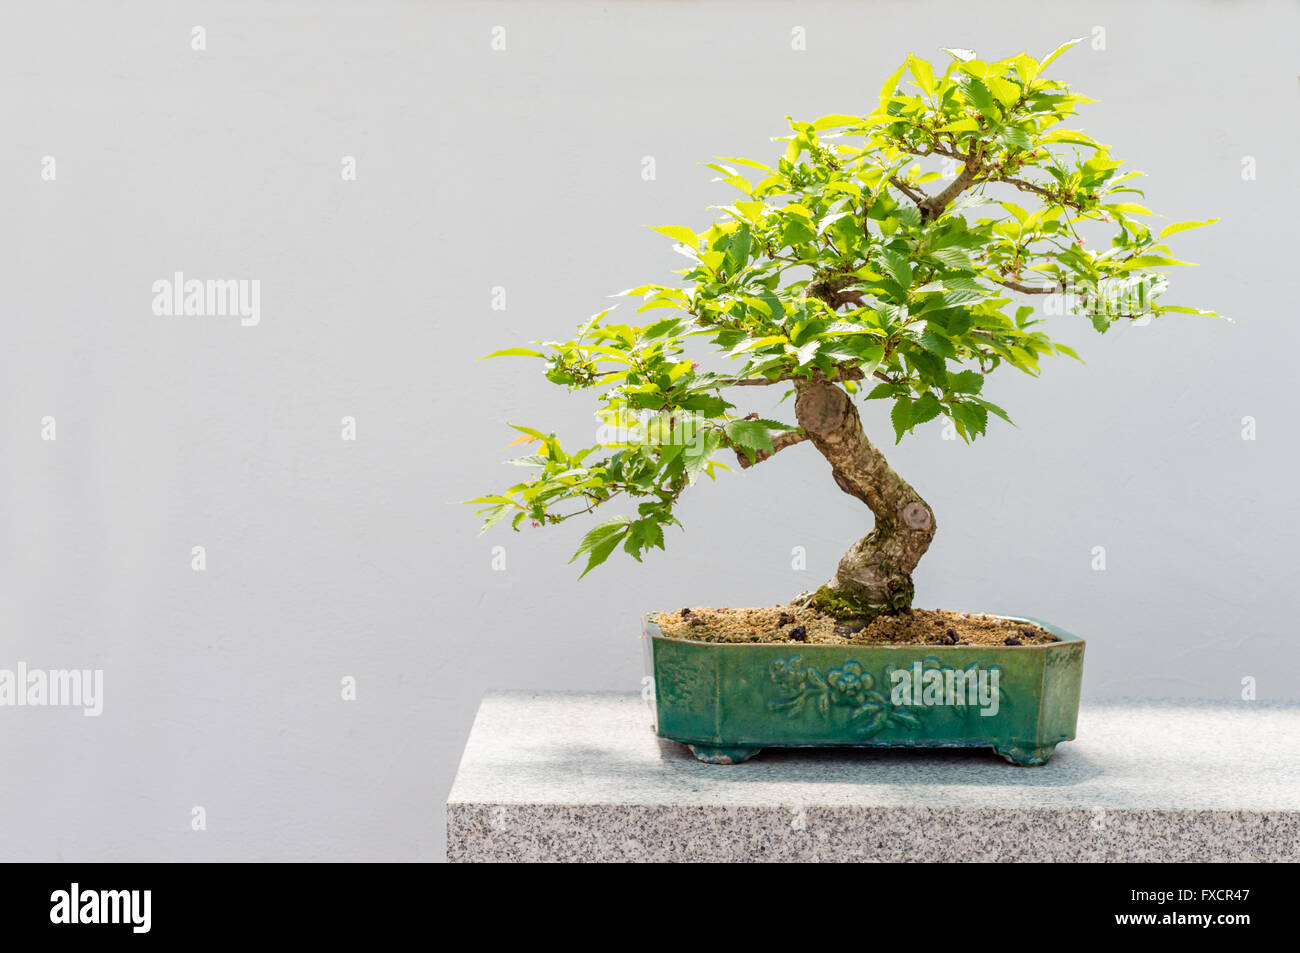 Bonsai tree bonzai tree outdoor hi-res stock photography and images - Alamy